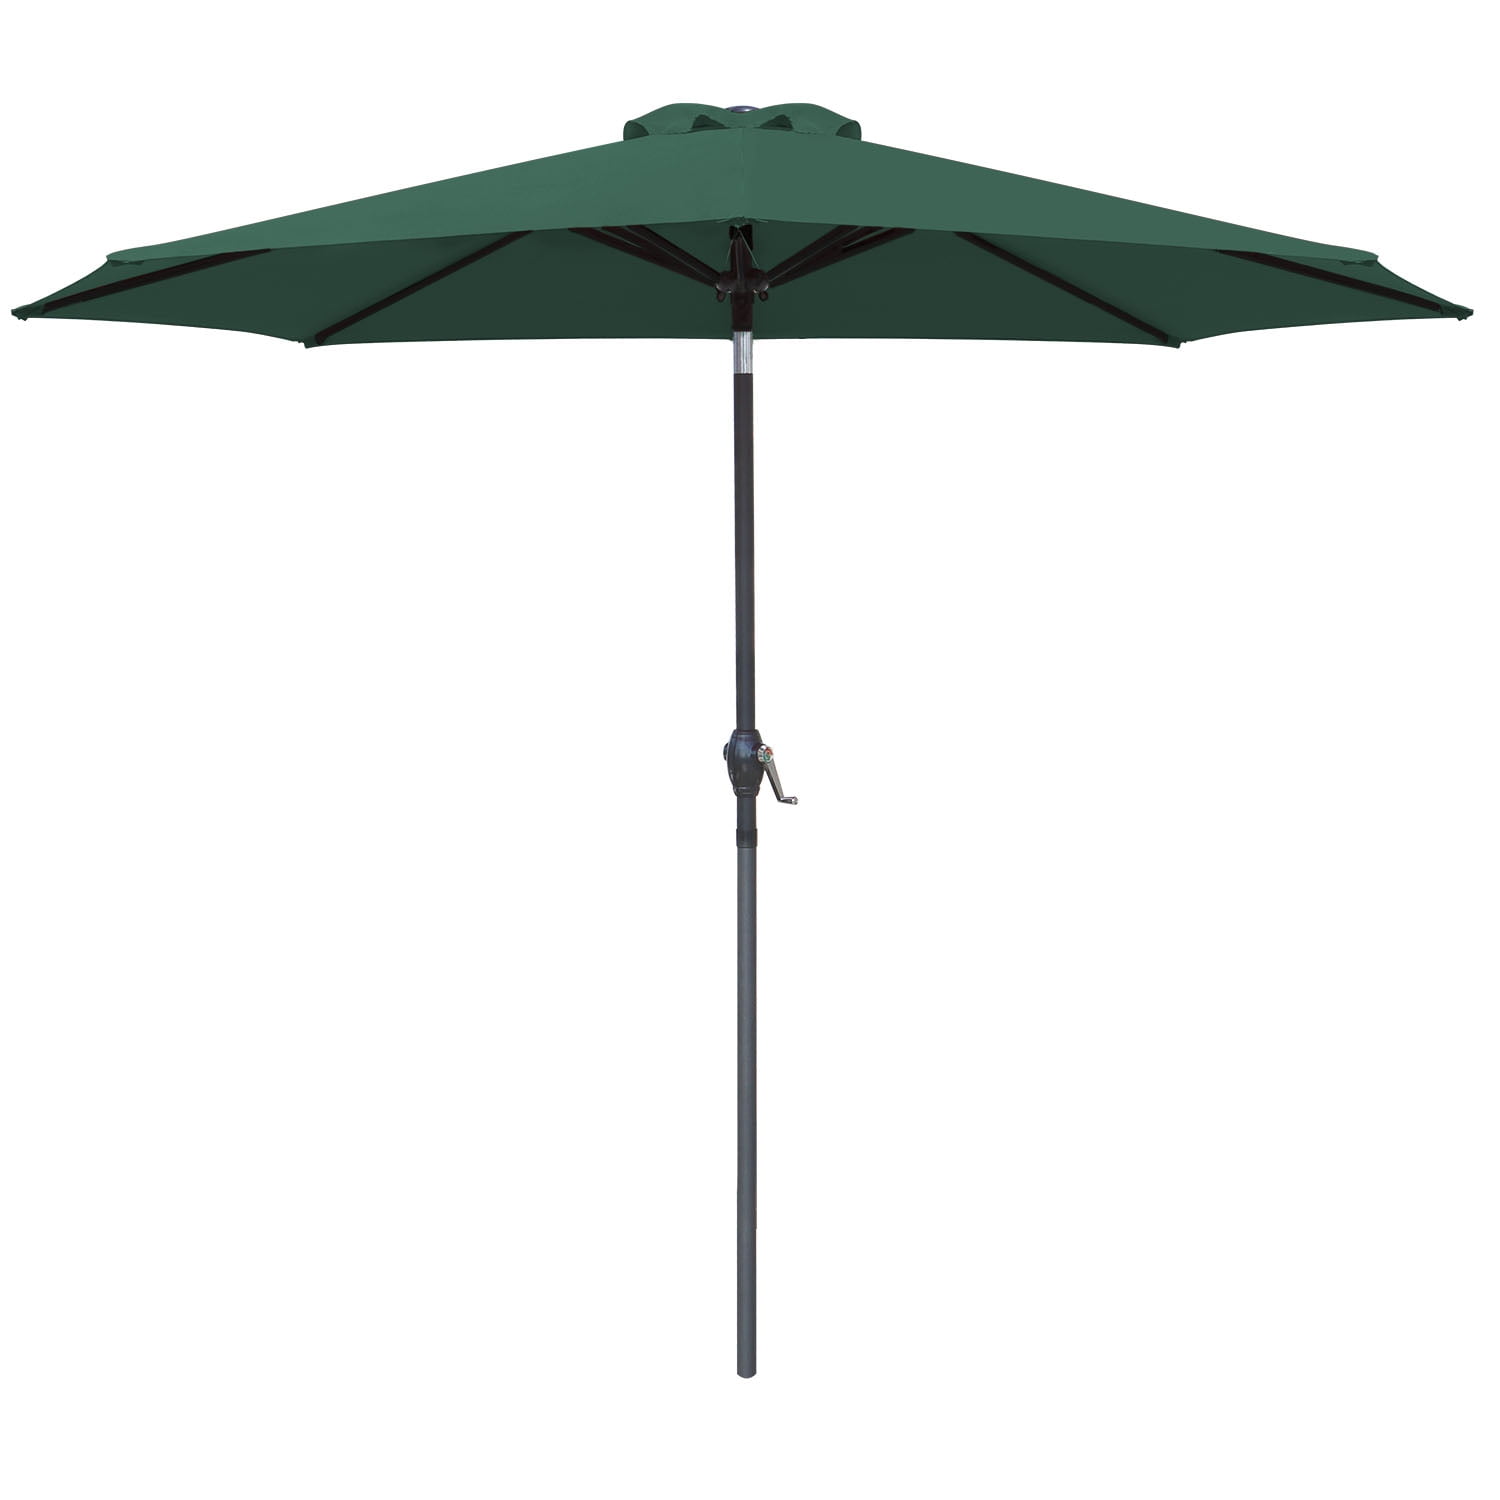 Walnew 9 Green Patio Umbrella Outdoor Market Table With Push On Tilt 6 Sy Ribs Com - How Do You Fix The Tilt Mechanism On A Patio Umbrella